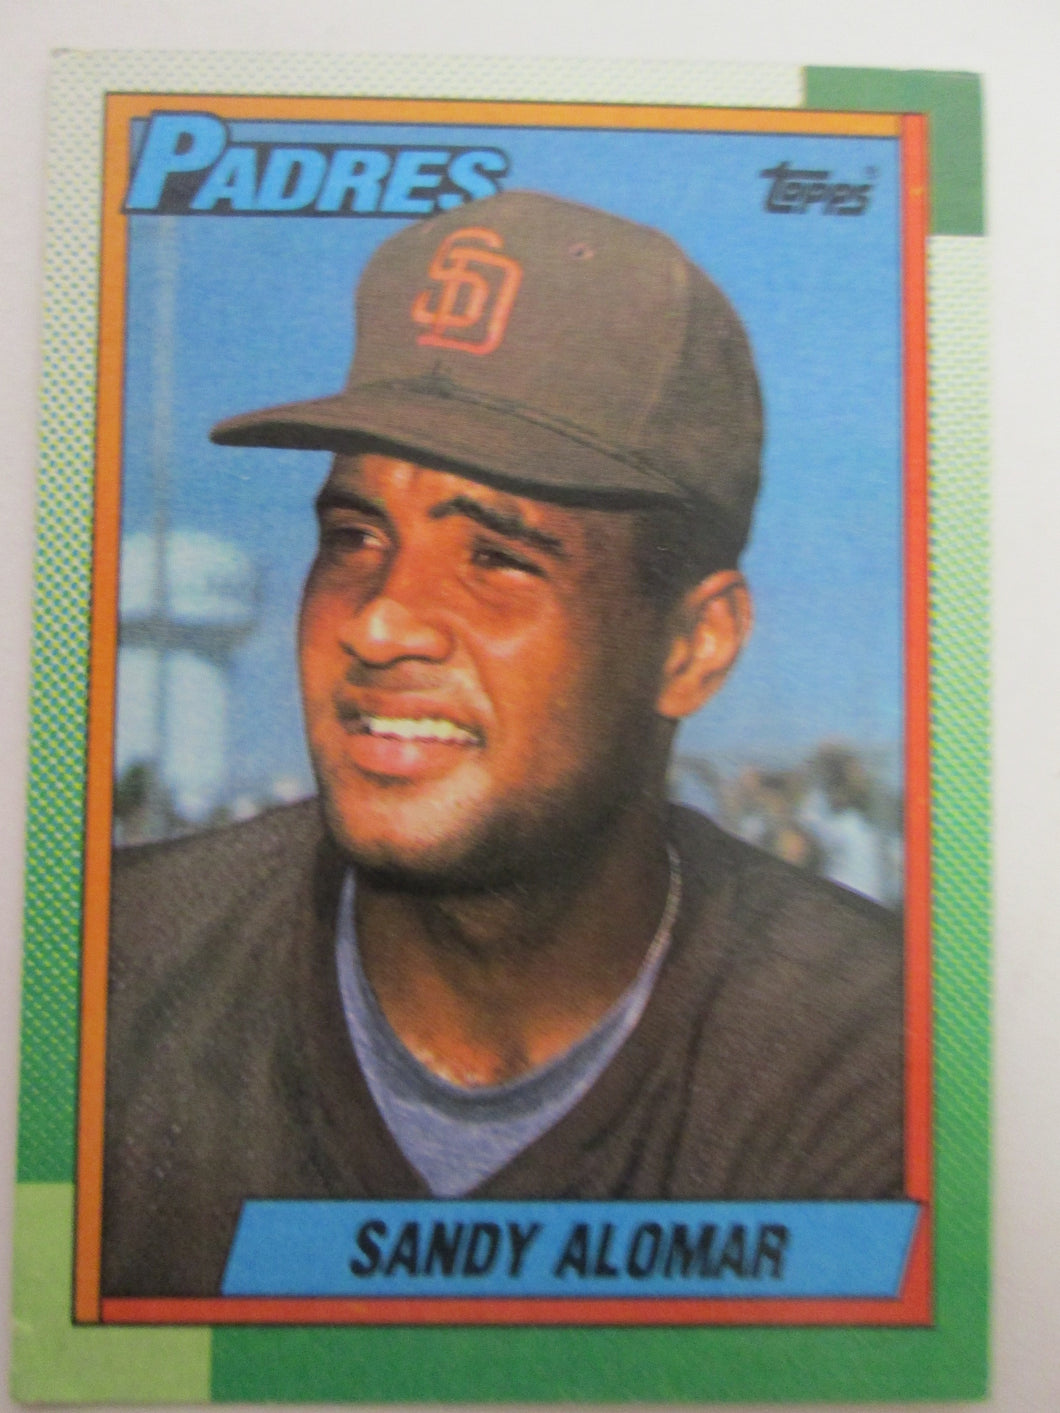 1990 Topps San Diego Padres Baseball Card #353 Sandy Alomar Jr.